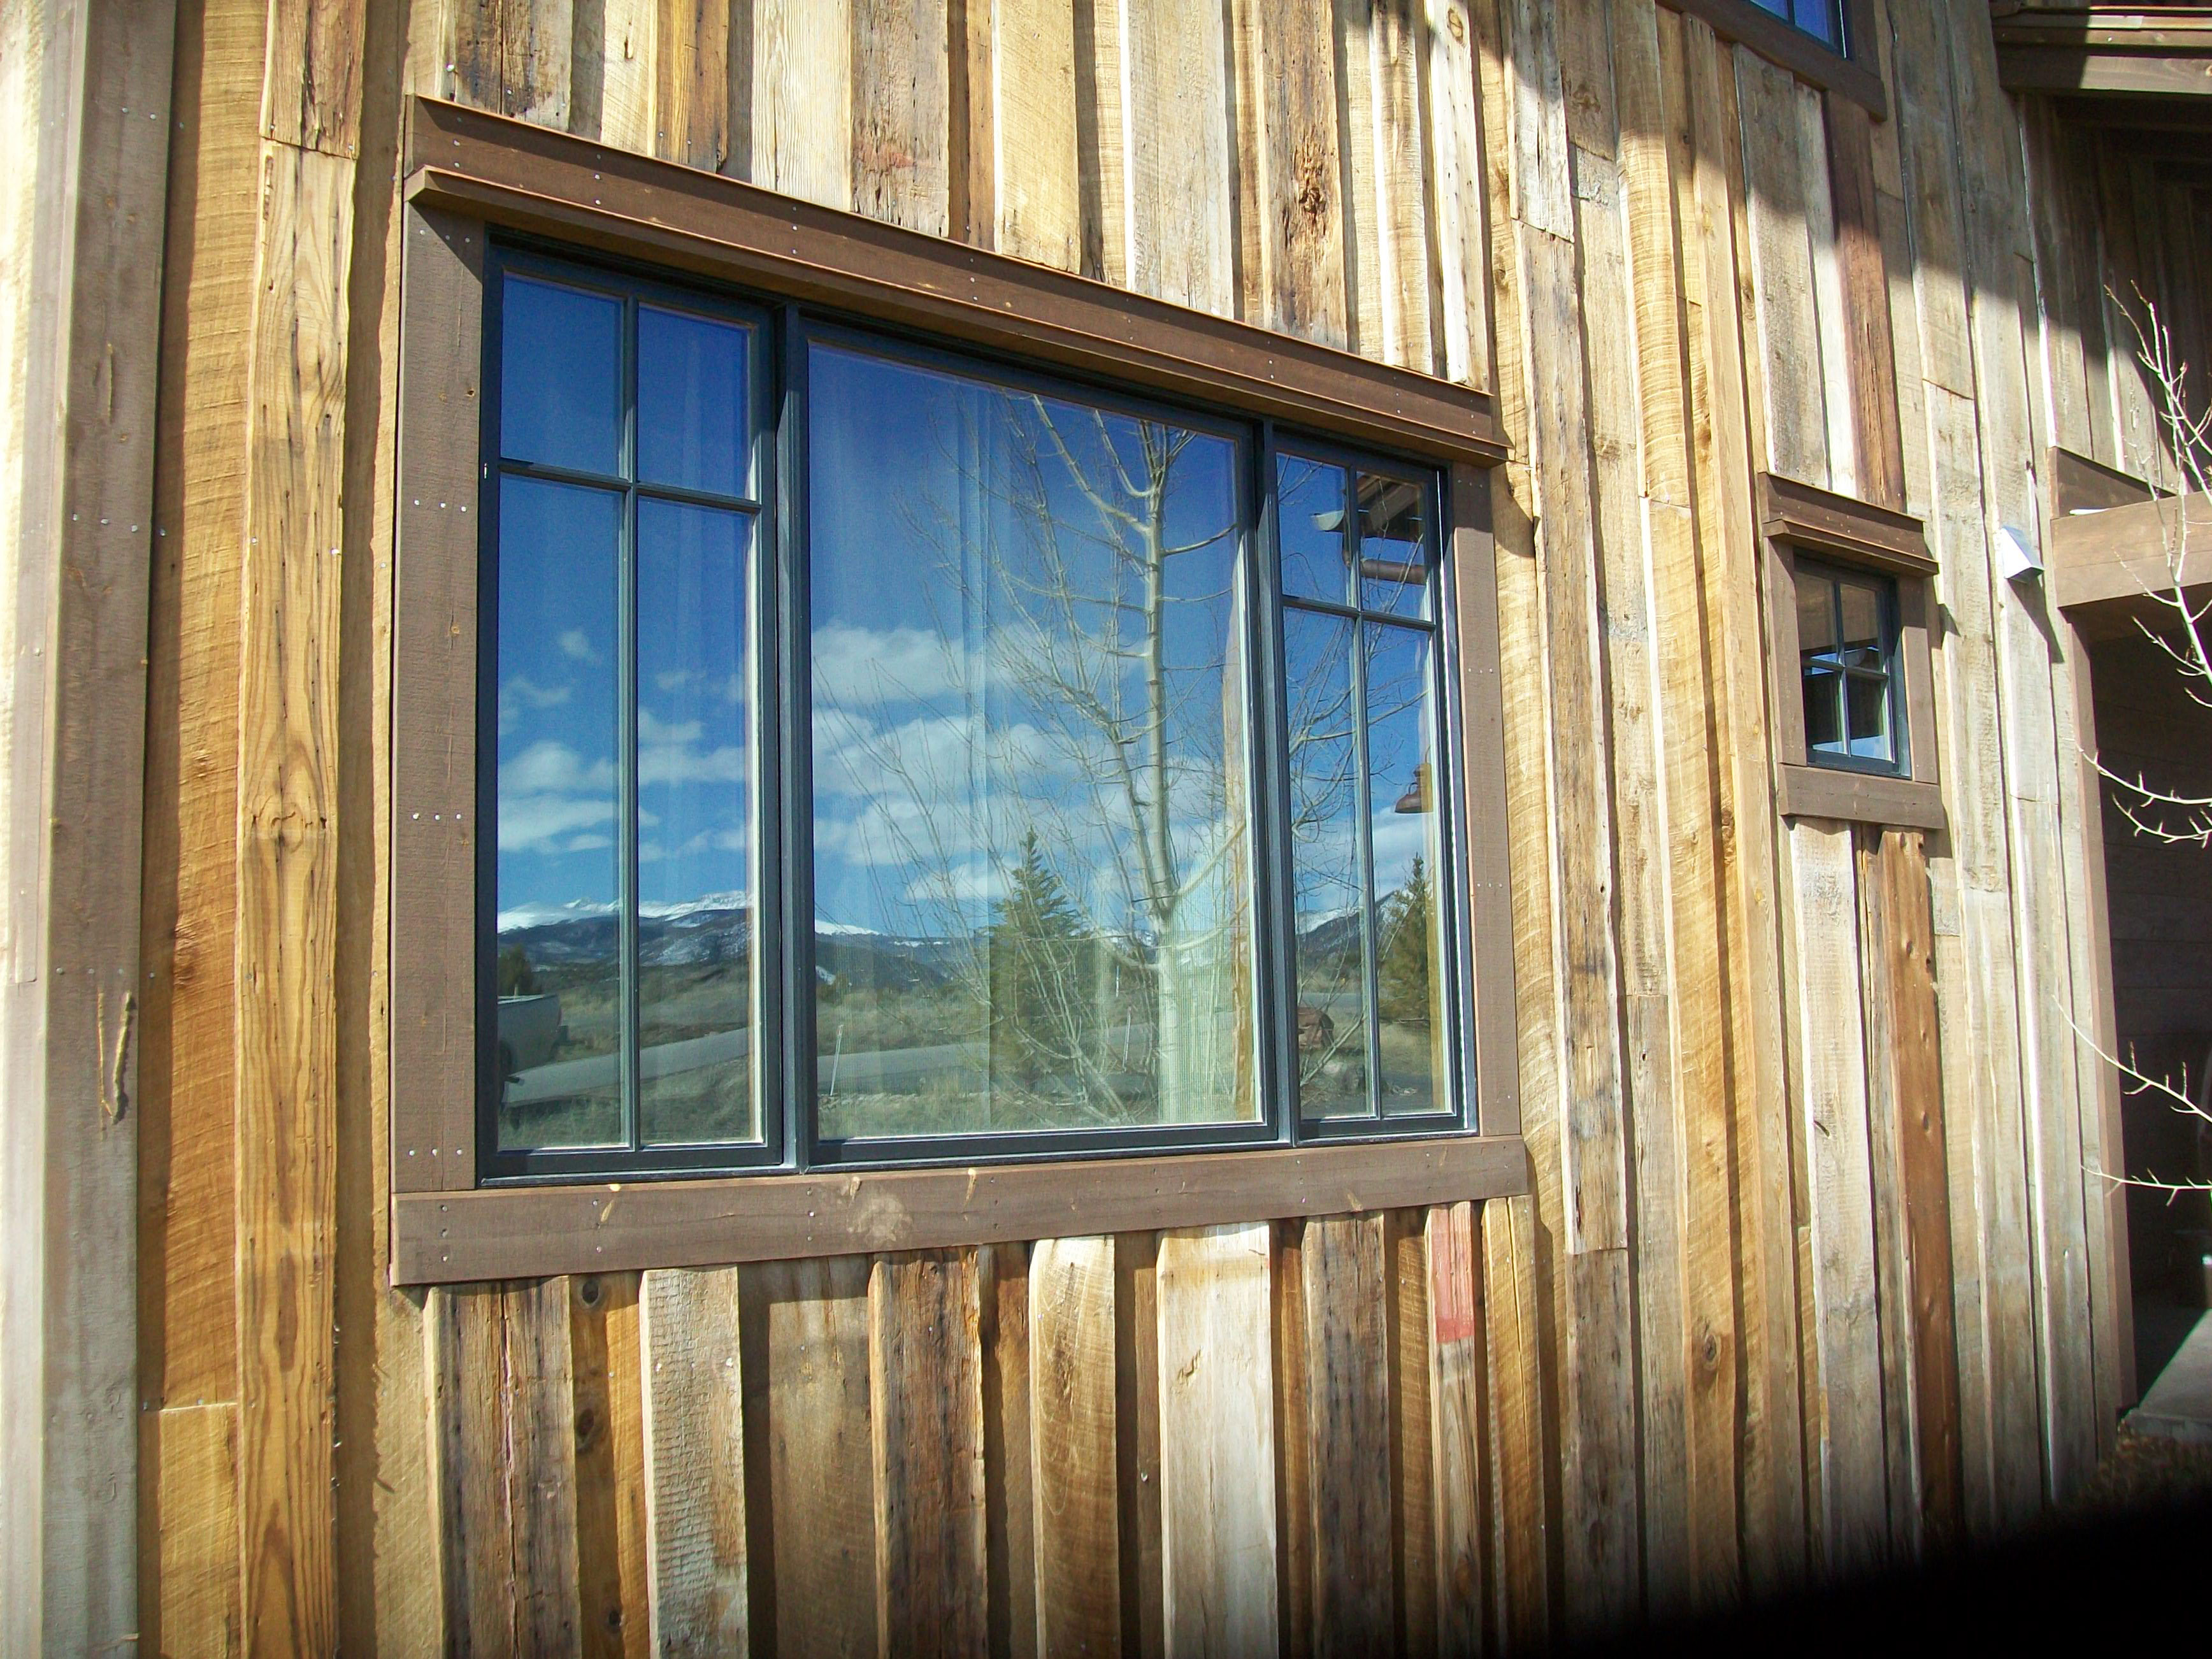 Reclaimed wood products, barn wood siding